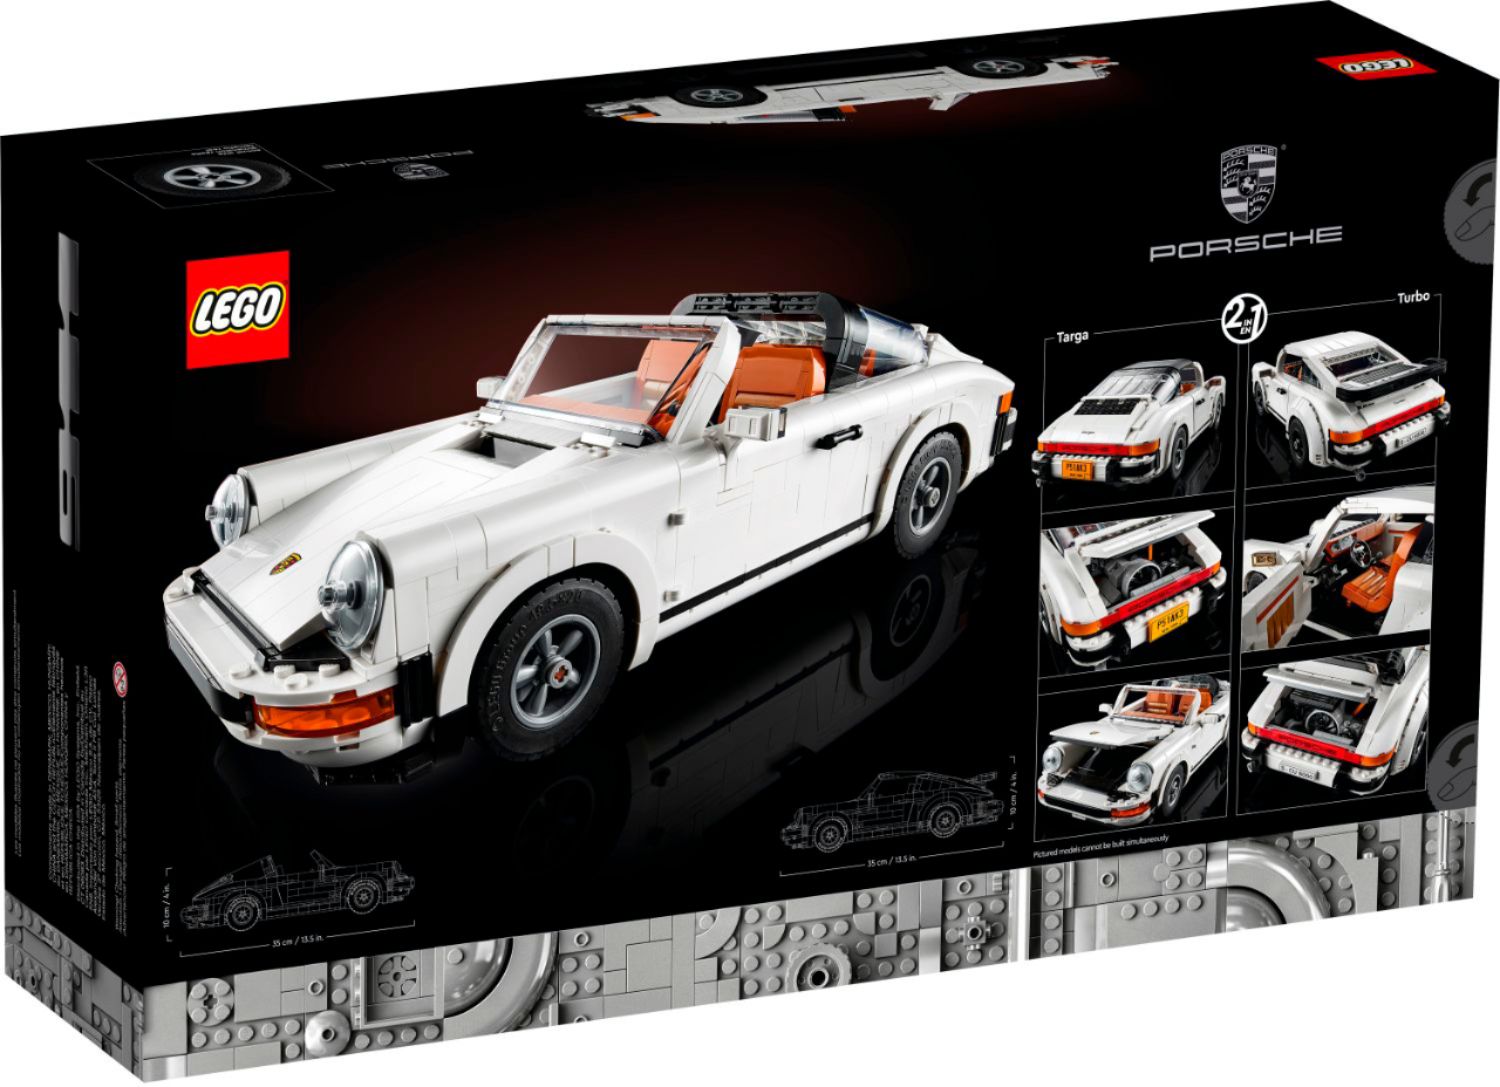 tage ned ventil maskine LEGO Icons Porsche 911 10295 6332965 - Best Buy